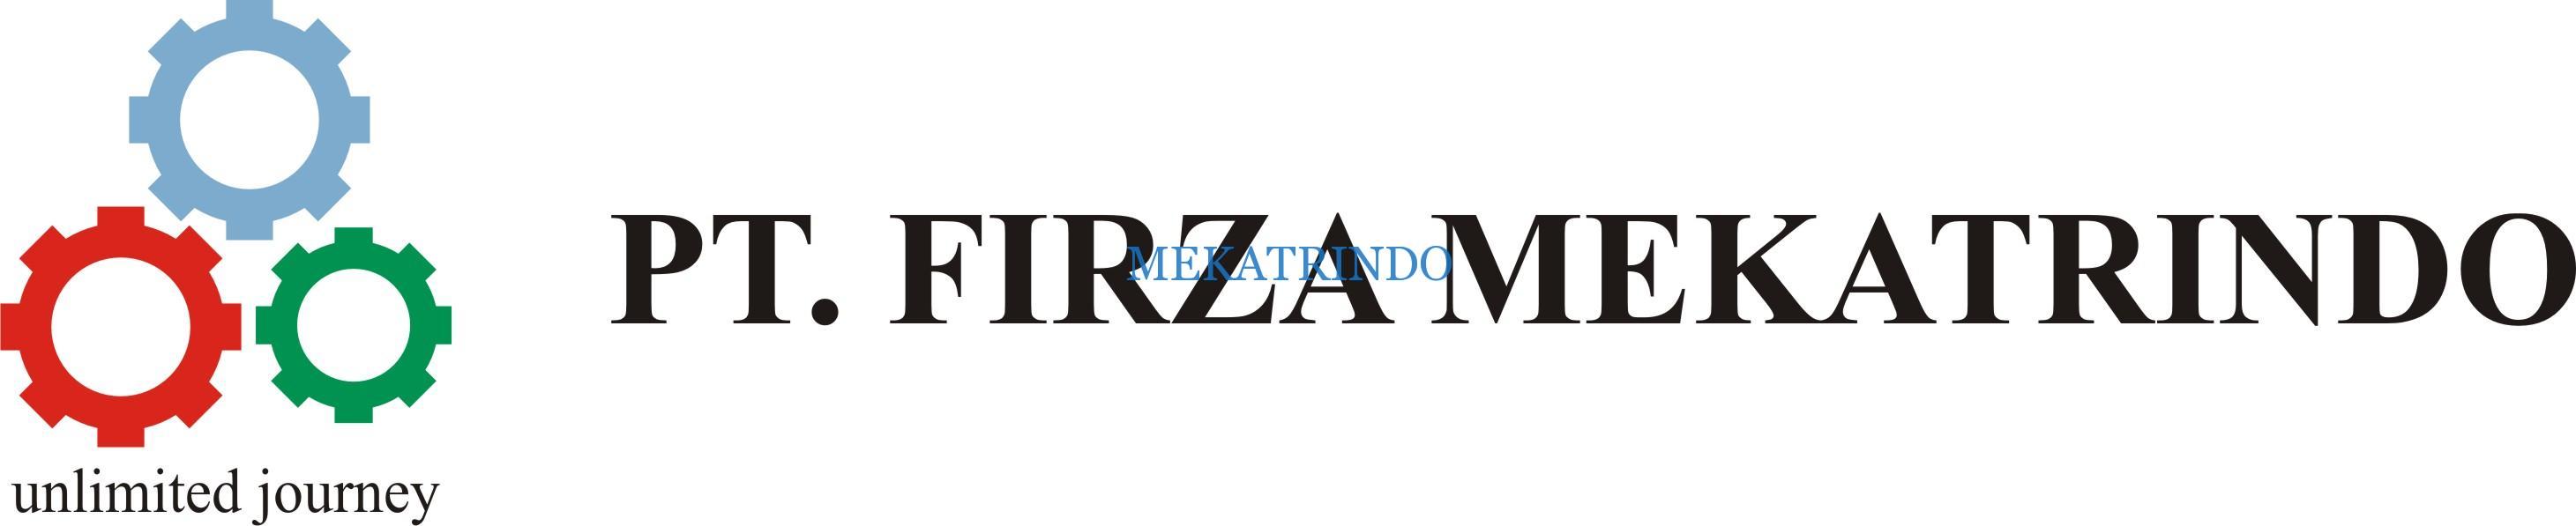 Logo PT. Firza Meka Trindo - Mekatrindo - indotraffic.net